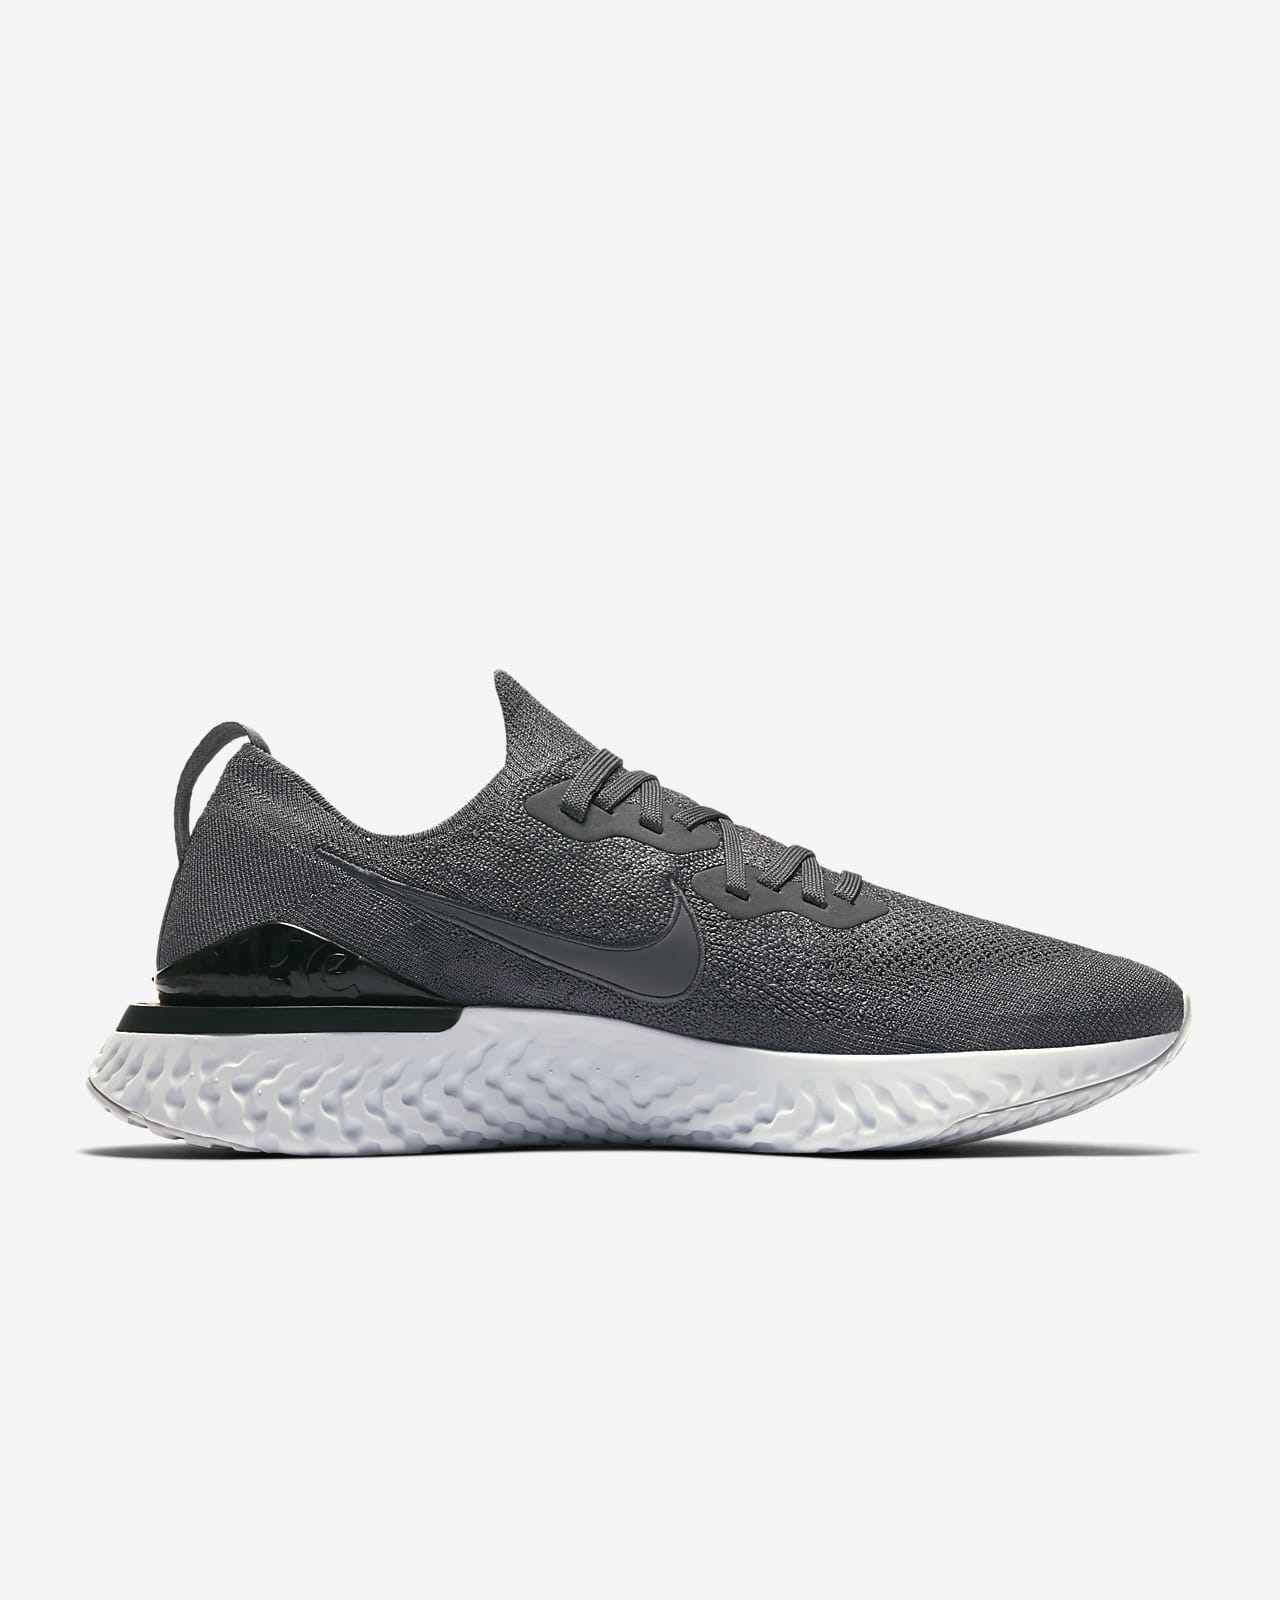 Nike Men's Epic React Flyknit Running Shoes White/black/blue | vlr.eng.br